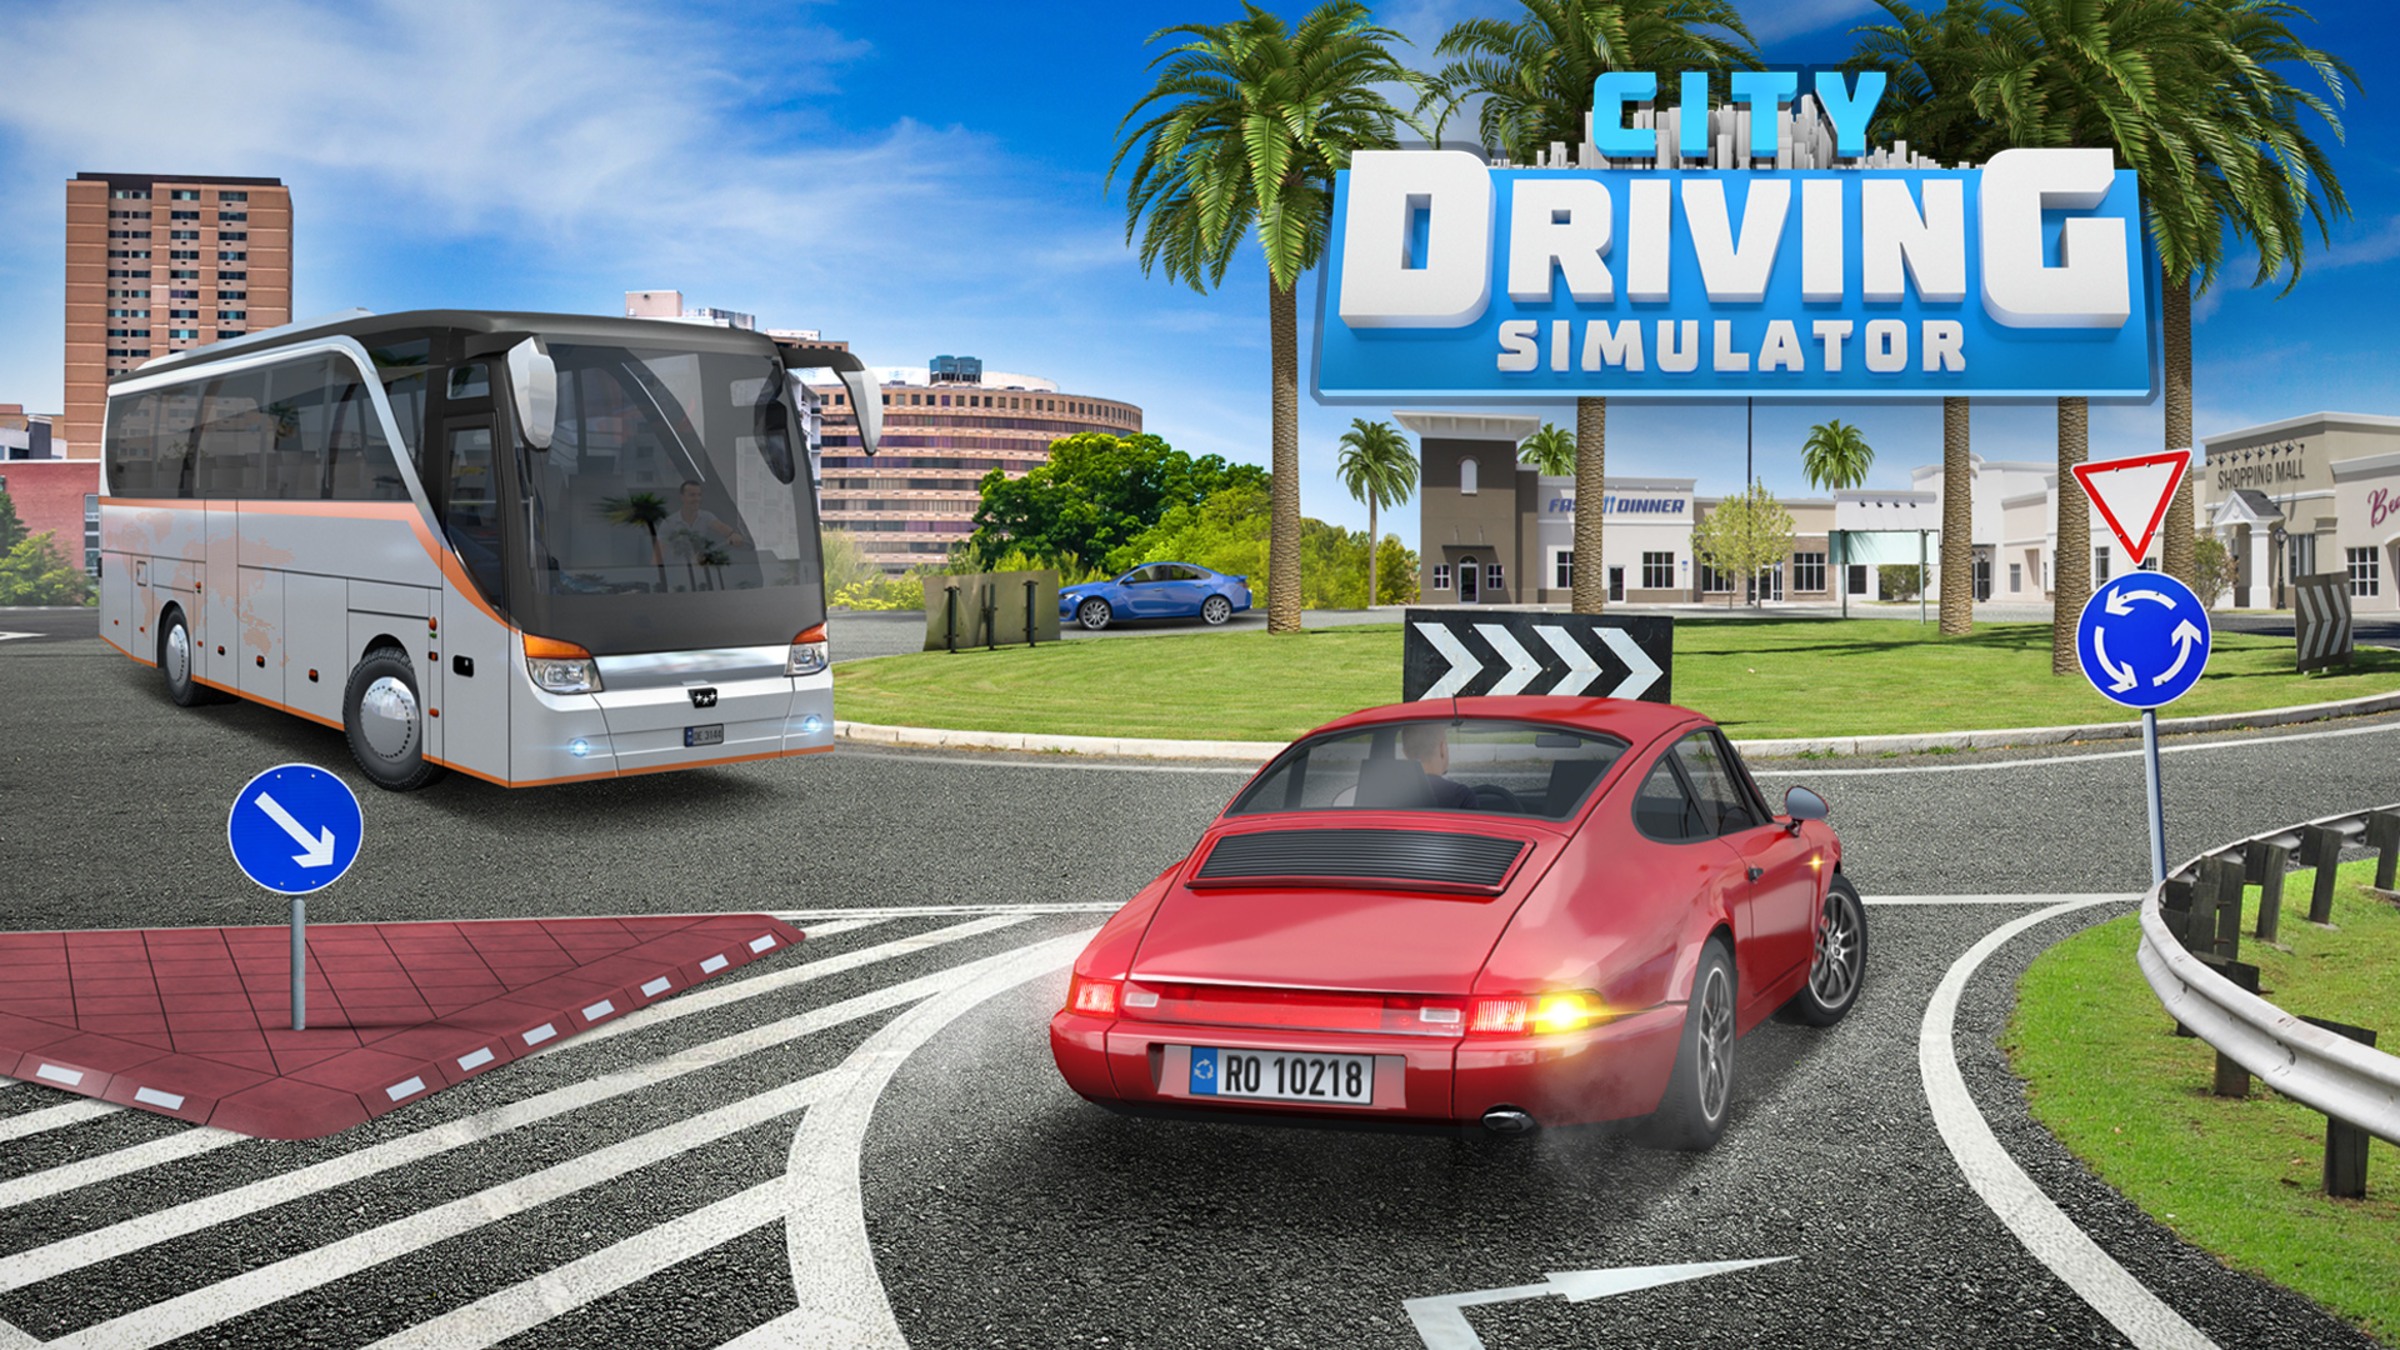 City Driving Simulator For Nintendo Switch - Nintendo Official Site